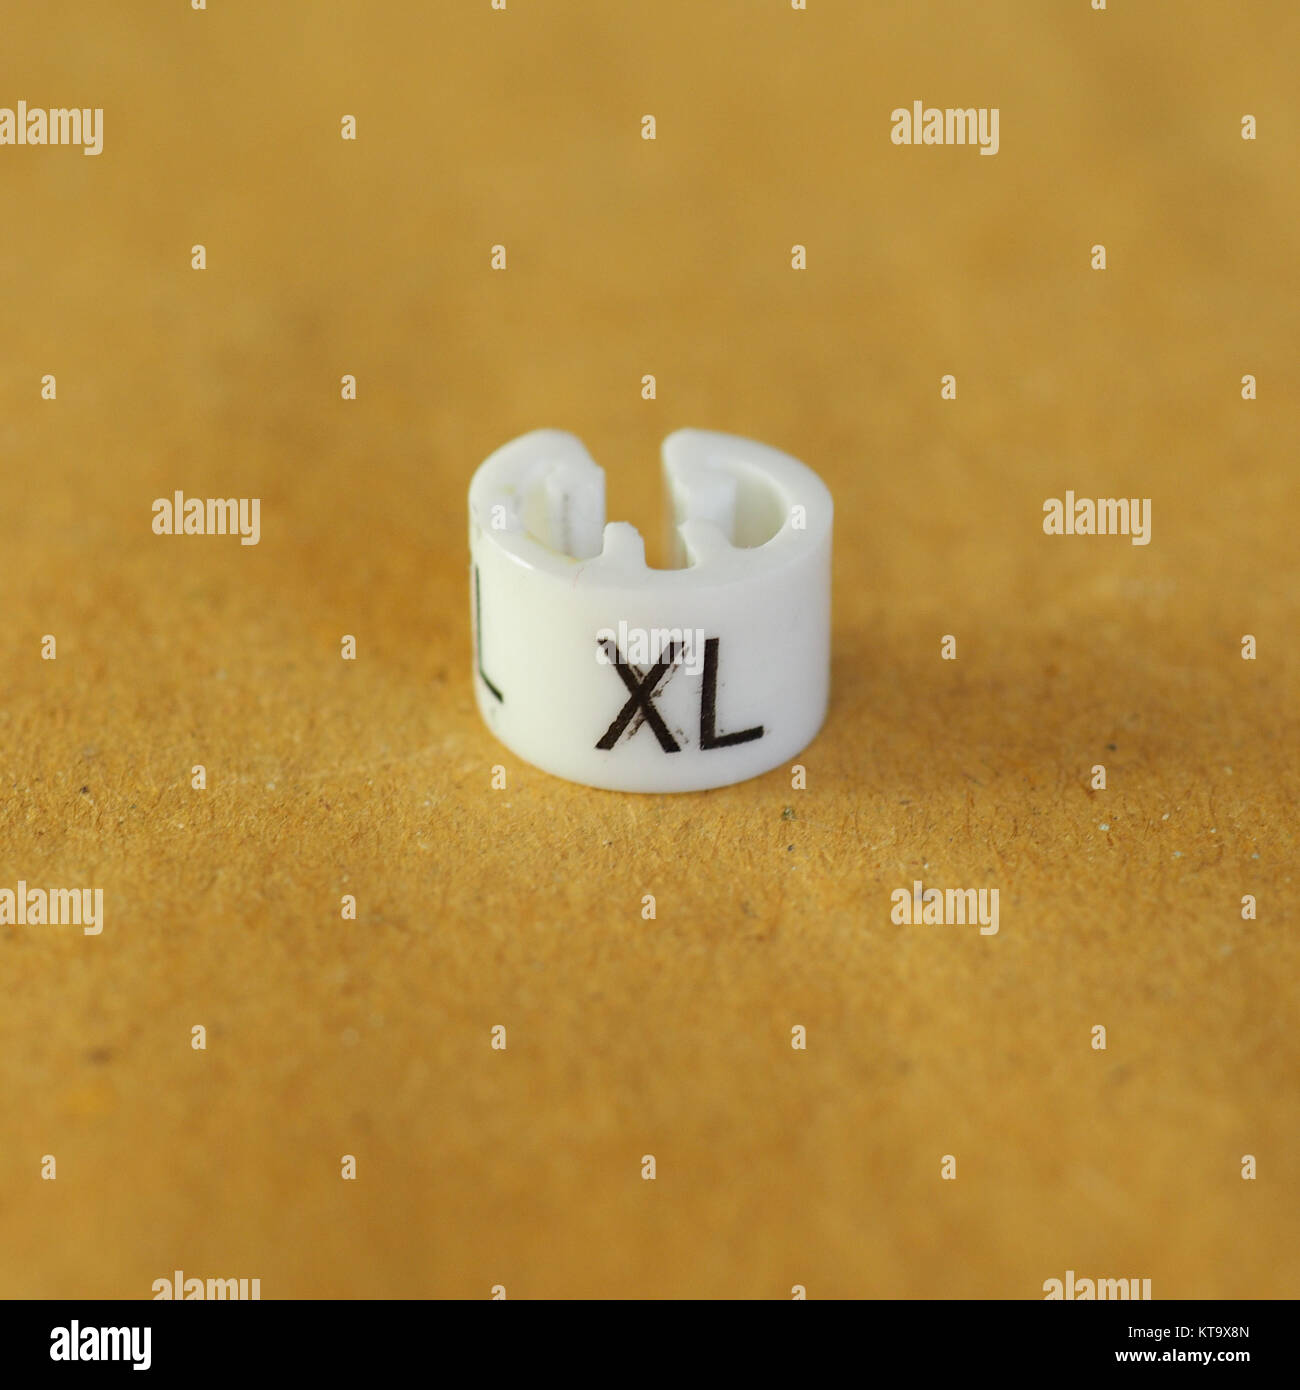 XL size tag Stock Photo